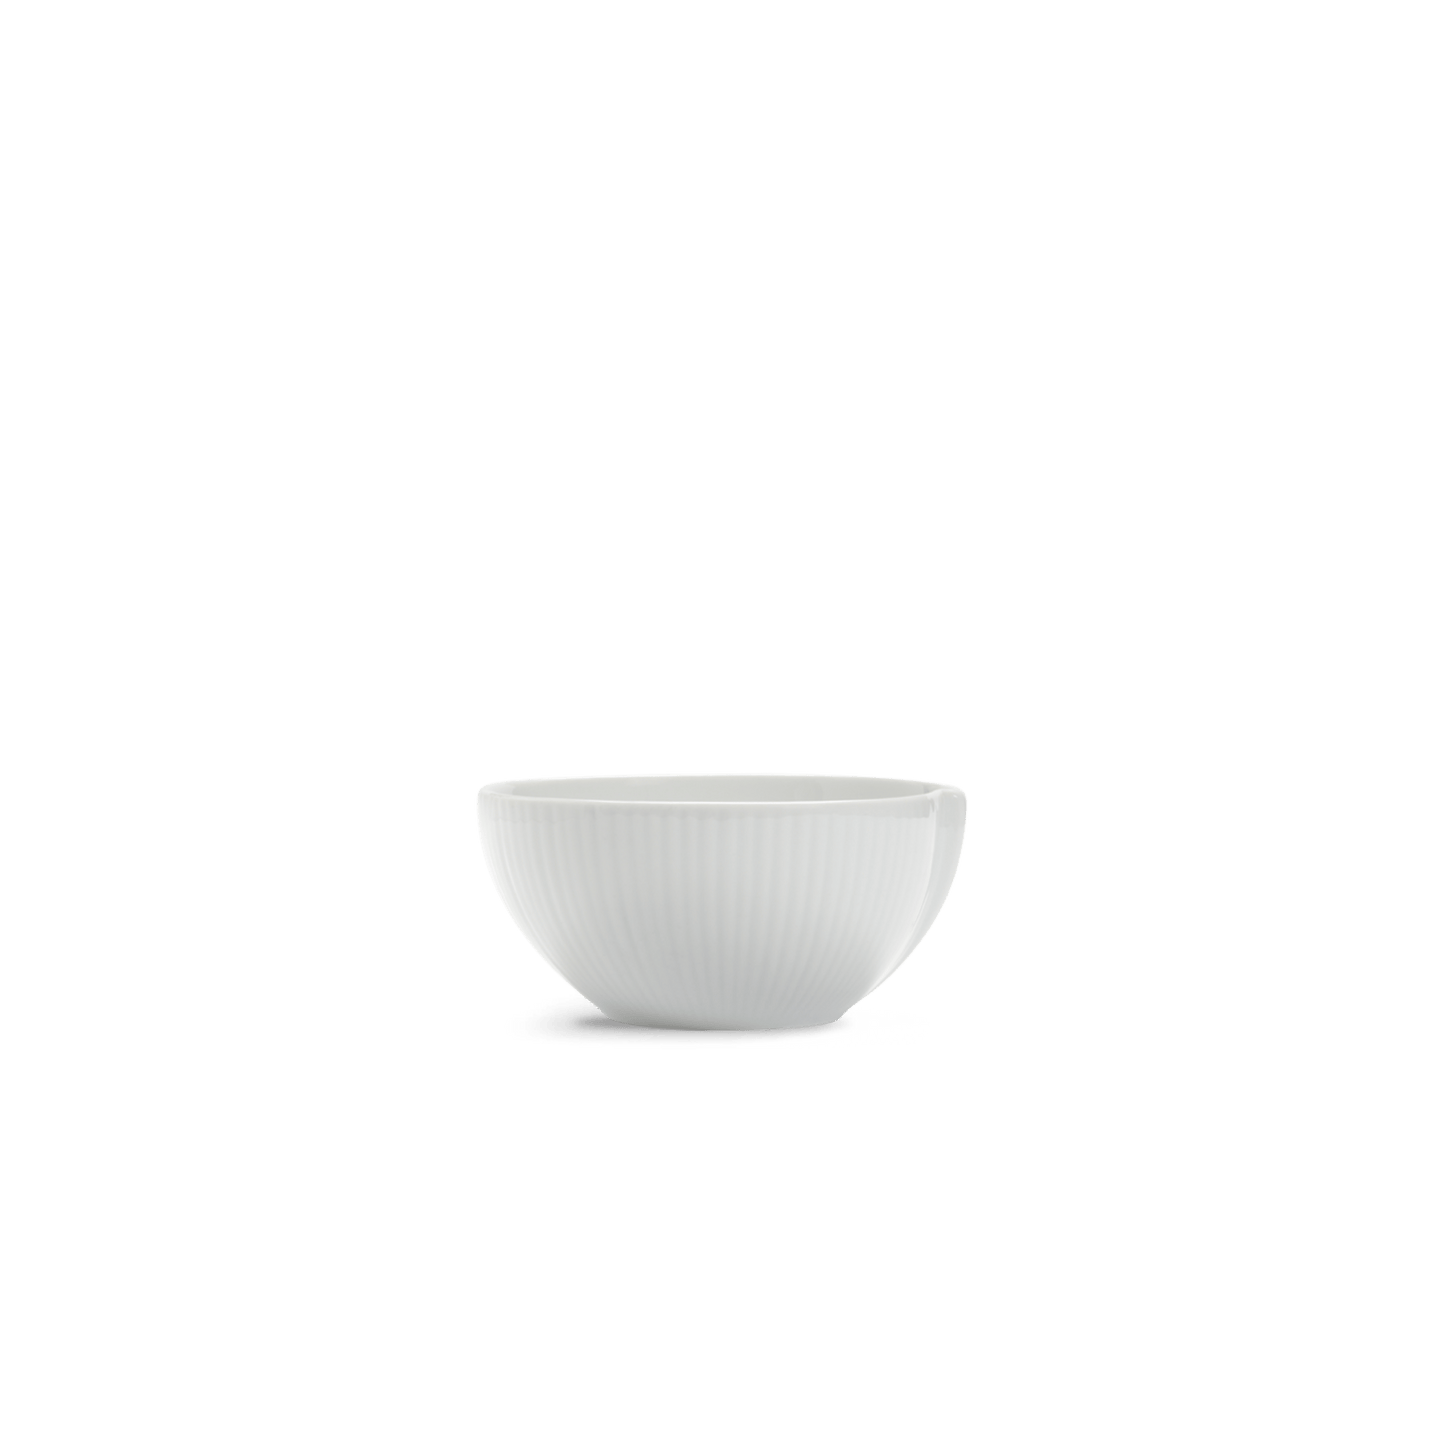 Pillivuyt Shop Bowl 4.75" diam x 2.5" H - 10 oz - Set of 4 Canopee Individual Bowls, Set of 4